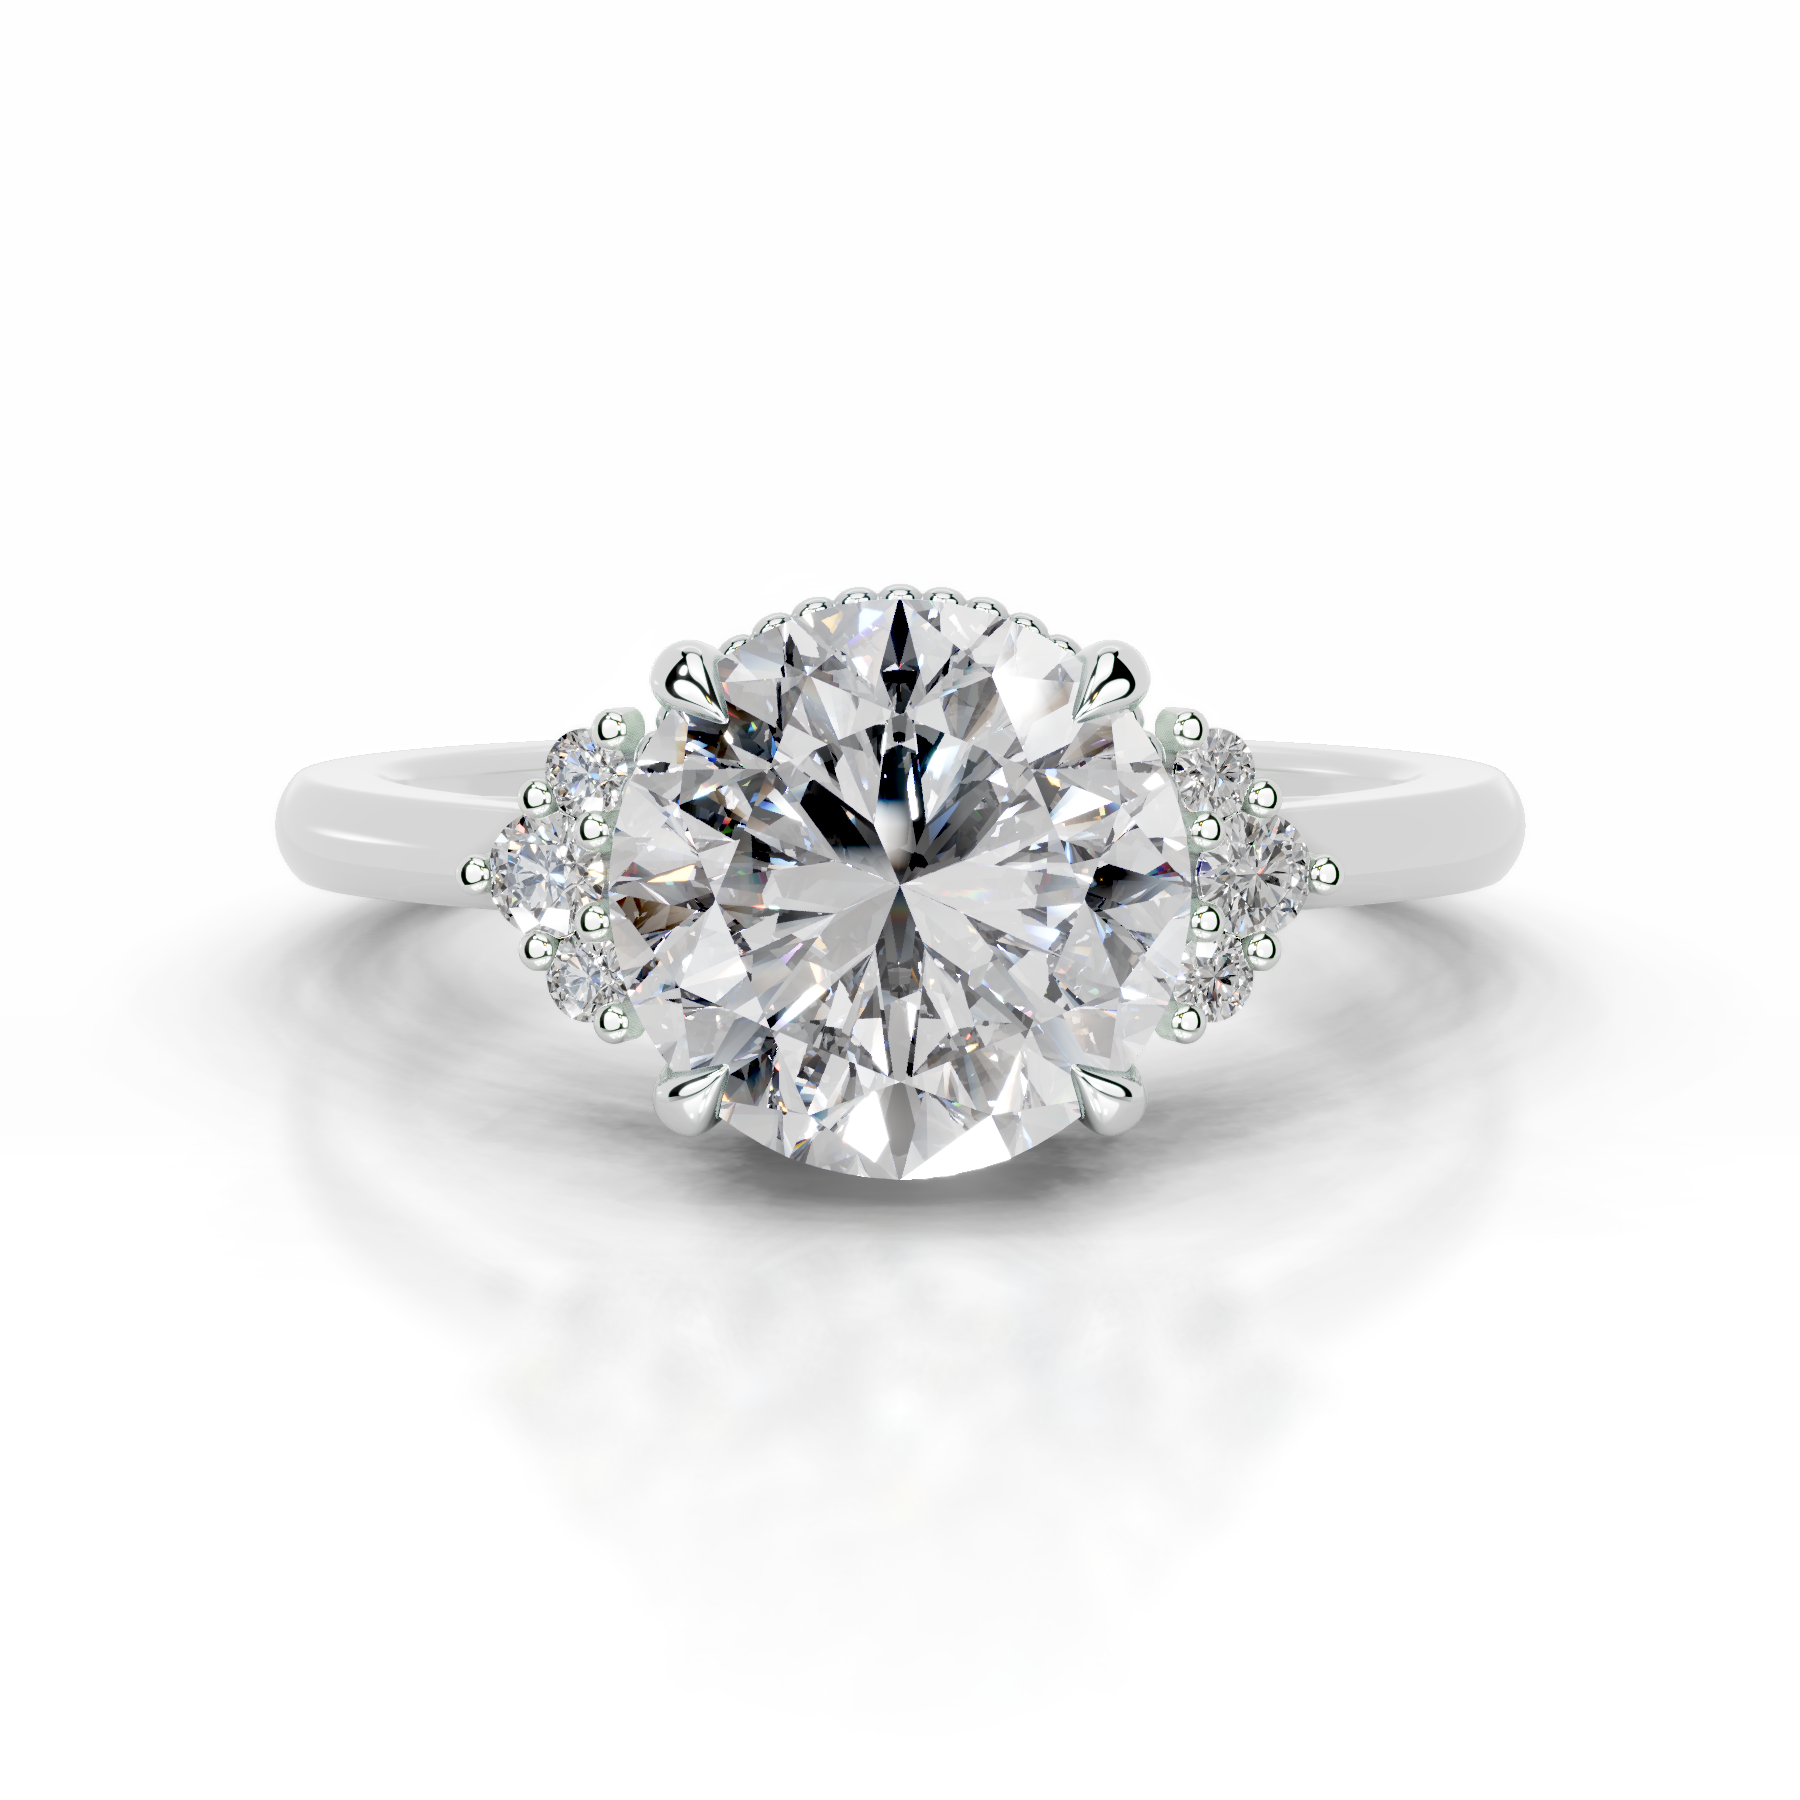 Natasha Diamond Engagement Ring   (2.10 Carat) -14K White Gold